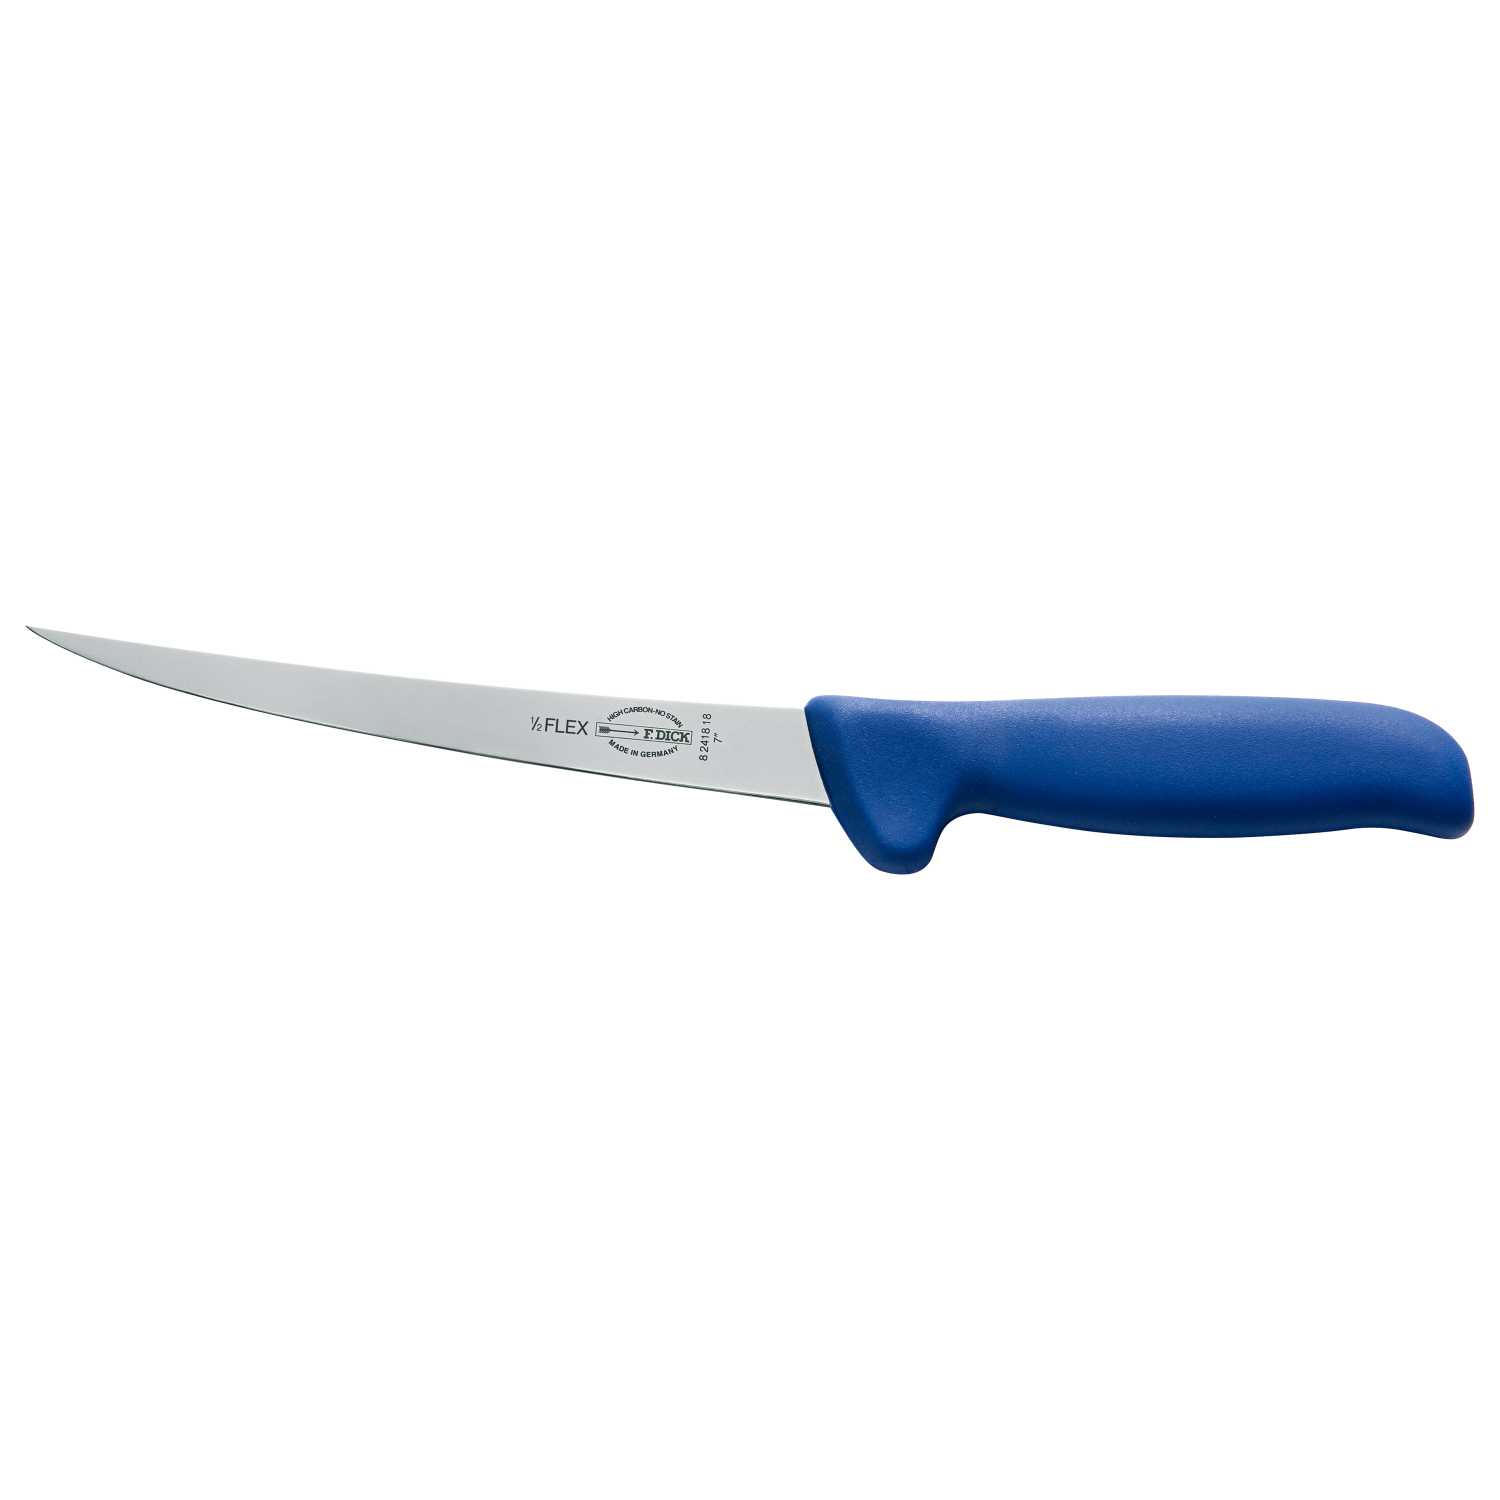 Dick Boning / Filing Knife (fixed blade) 